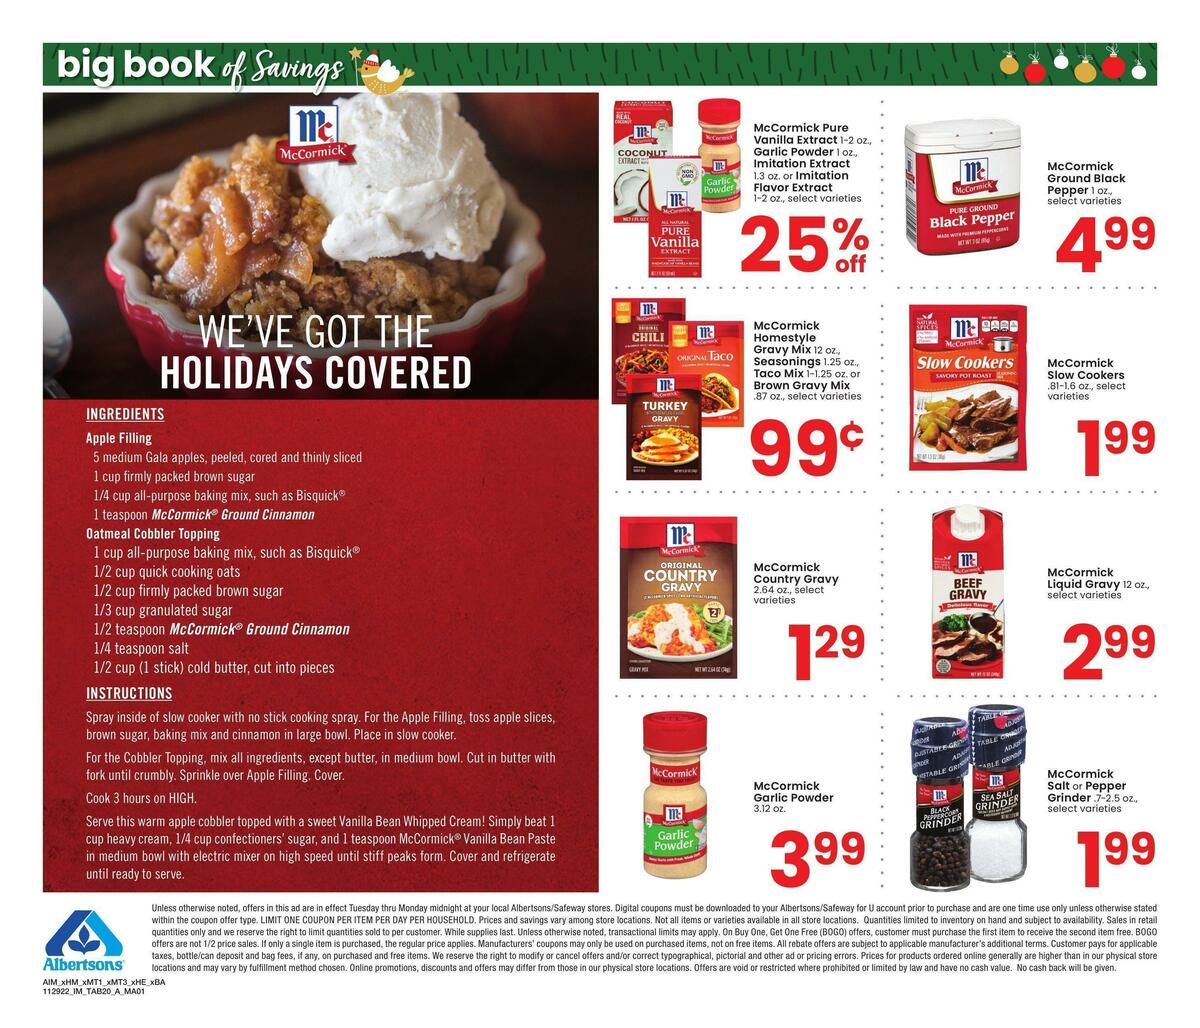 Albertsons Big Book of Savings Weekly Ad from November 29